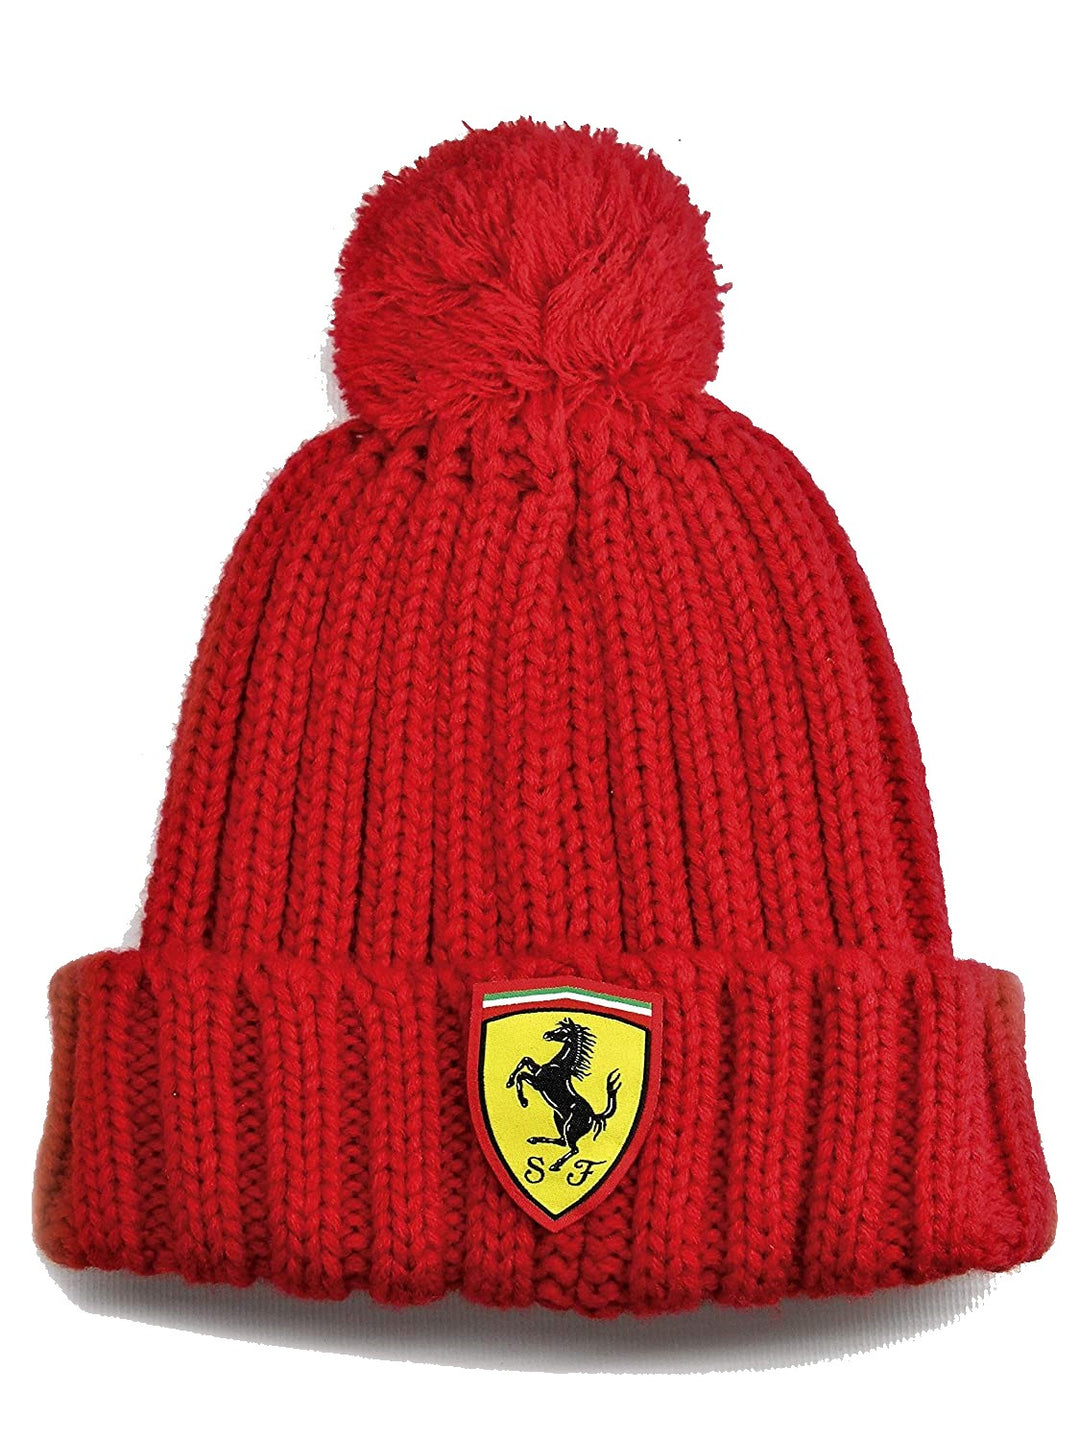 Scuderia Ferrari Pom Pom Winter Beanie Infant Toddler Youth Hat - Kids - Red